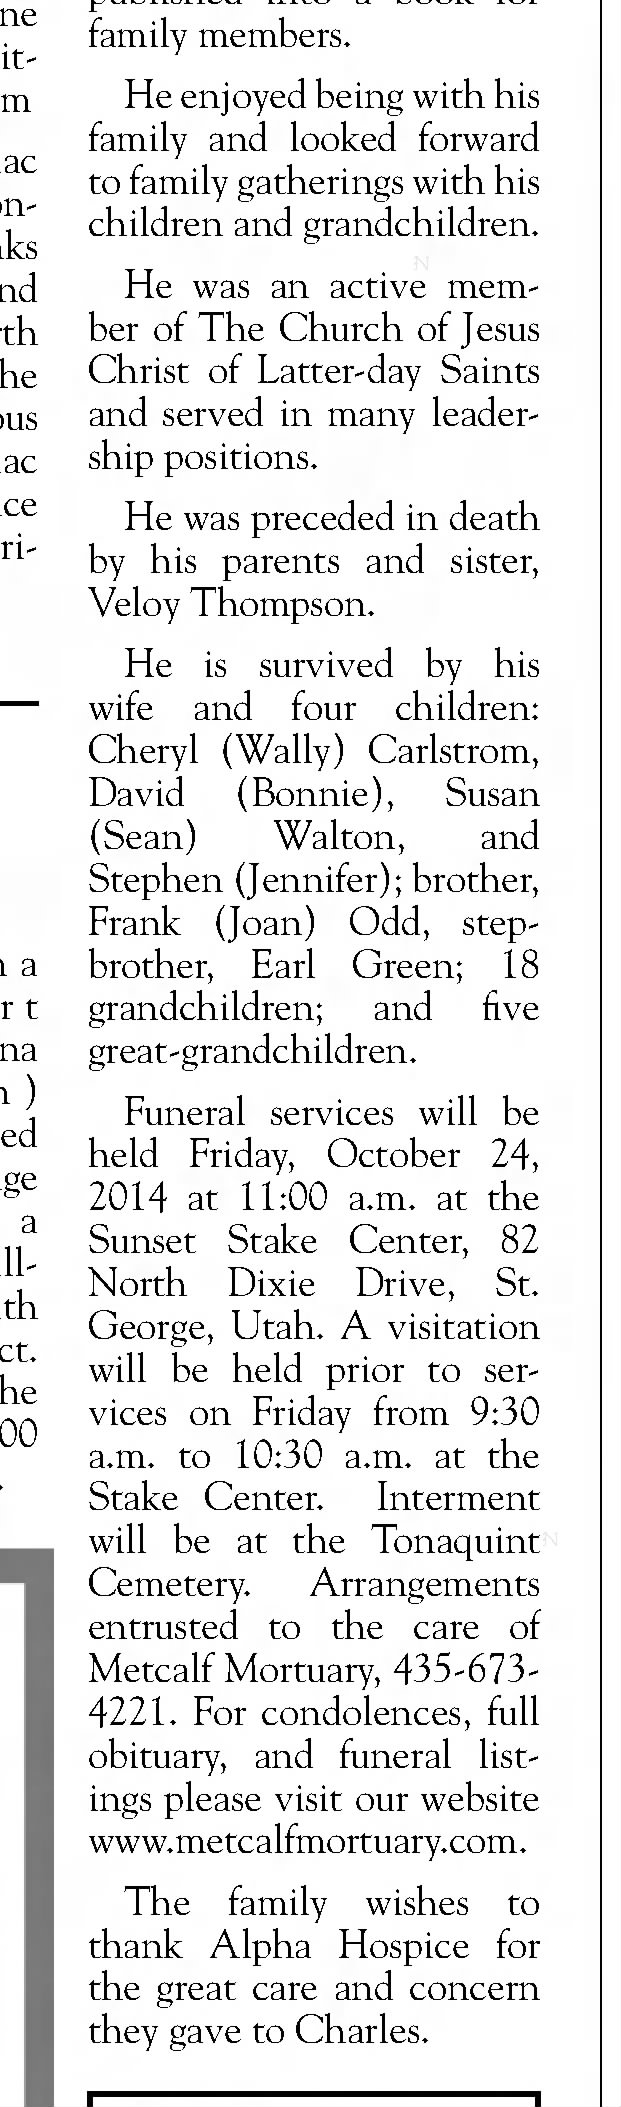 Charles Walter Odd obituary pg 2